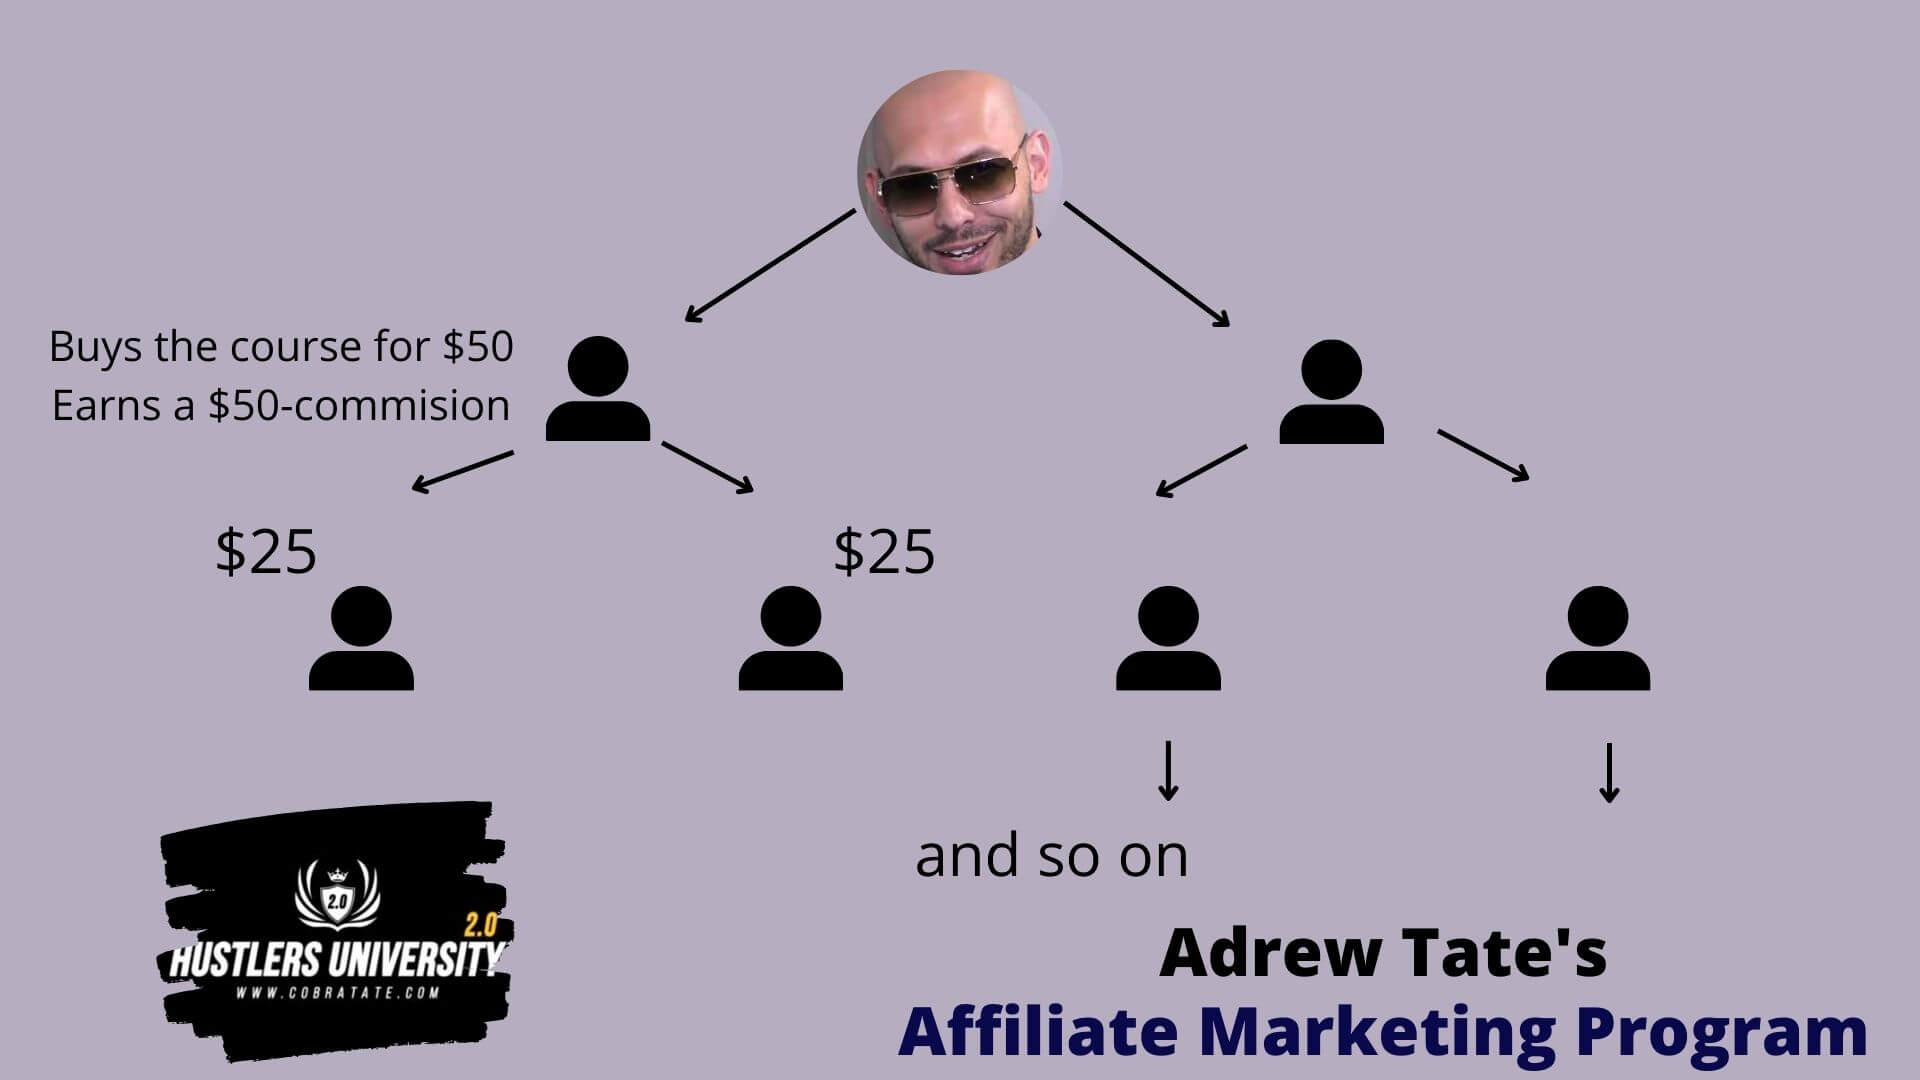 adrew tate affiliate marketing program